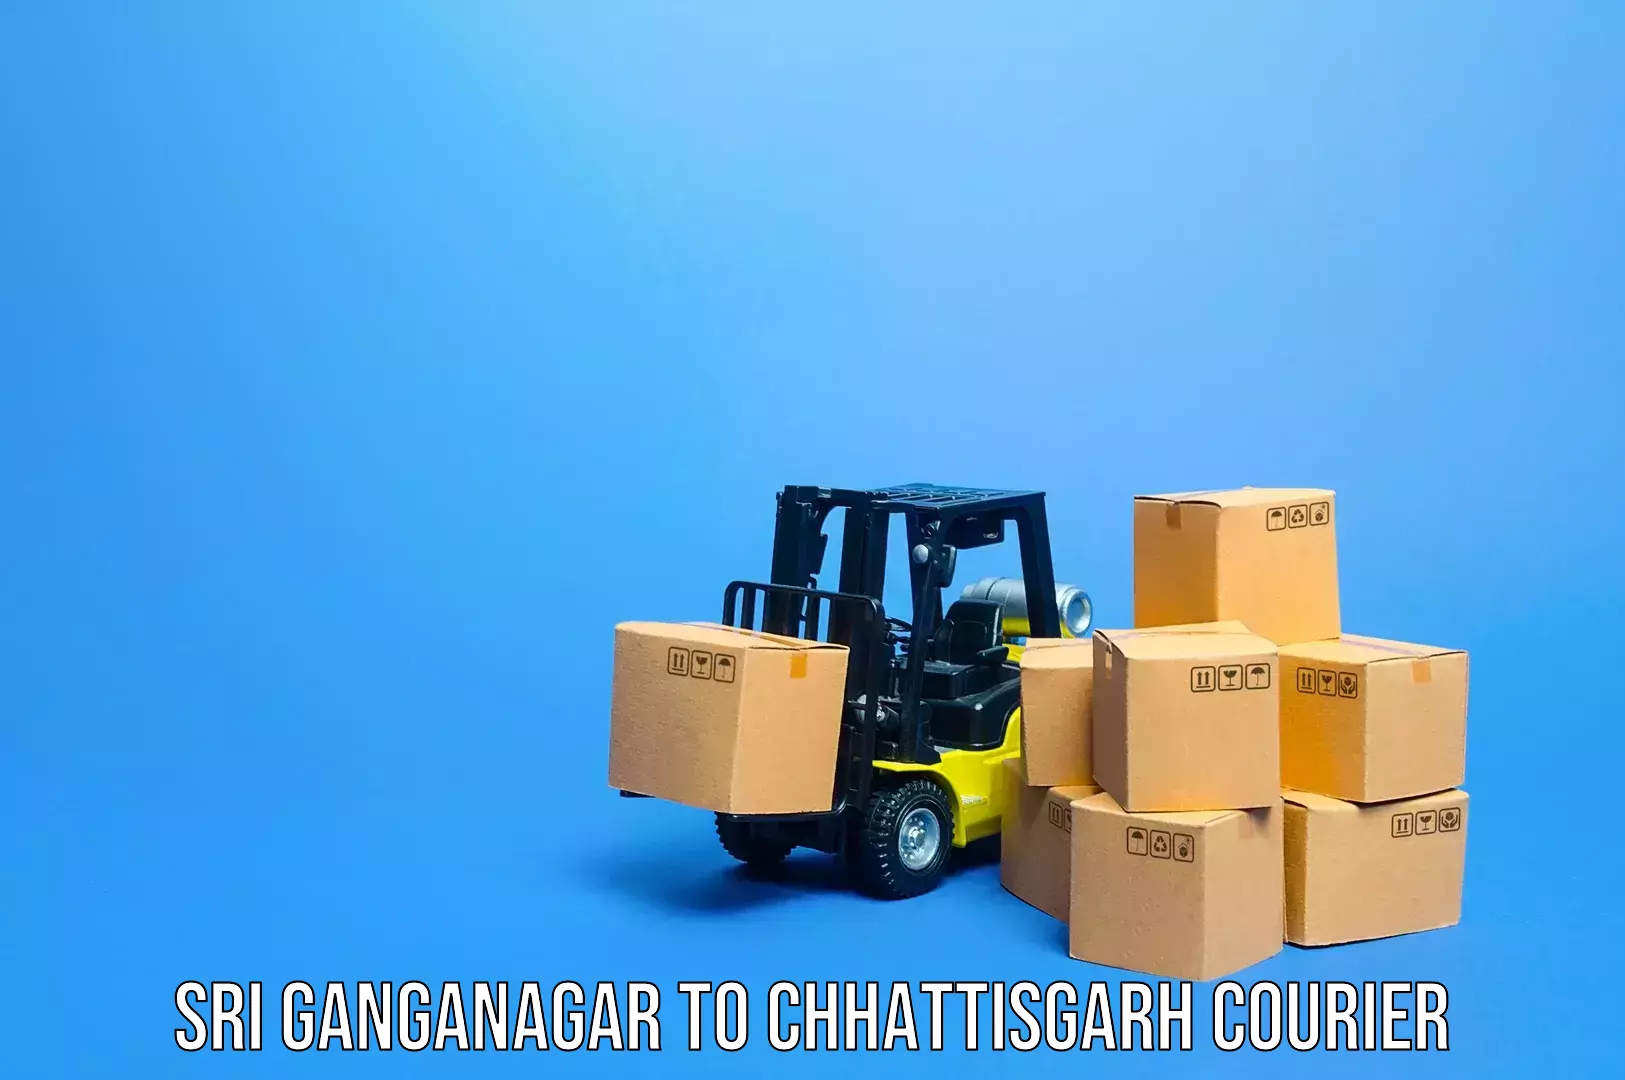 Luggage shipment tracking in Sri Ganganagar to Jagdalpur